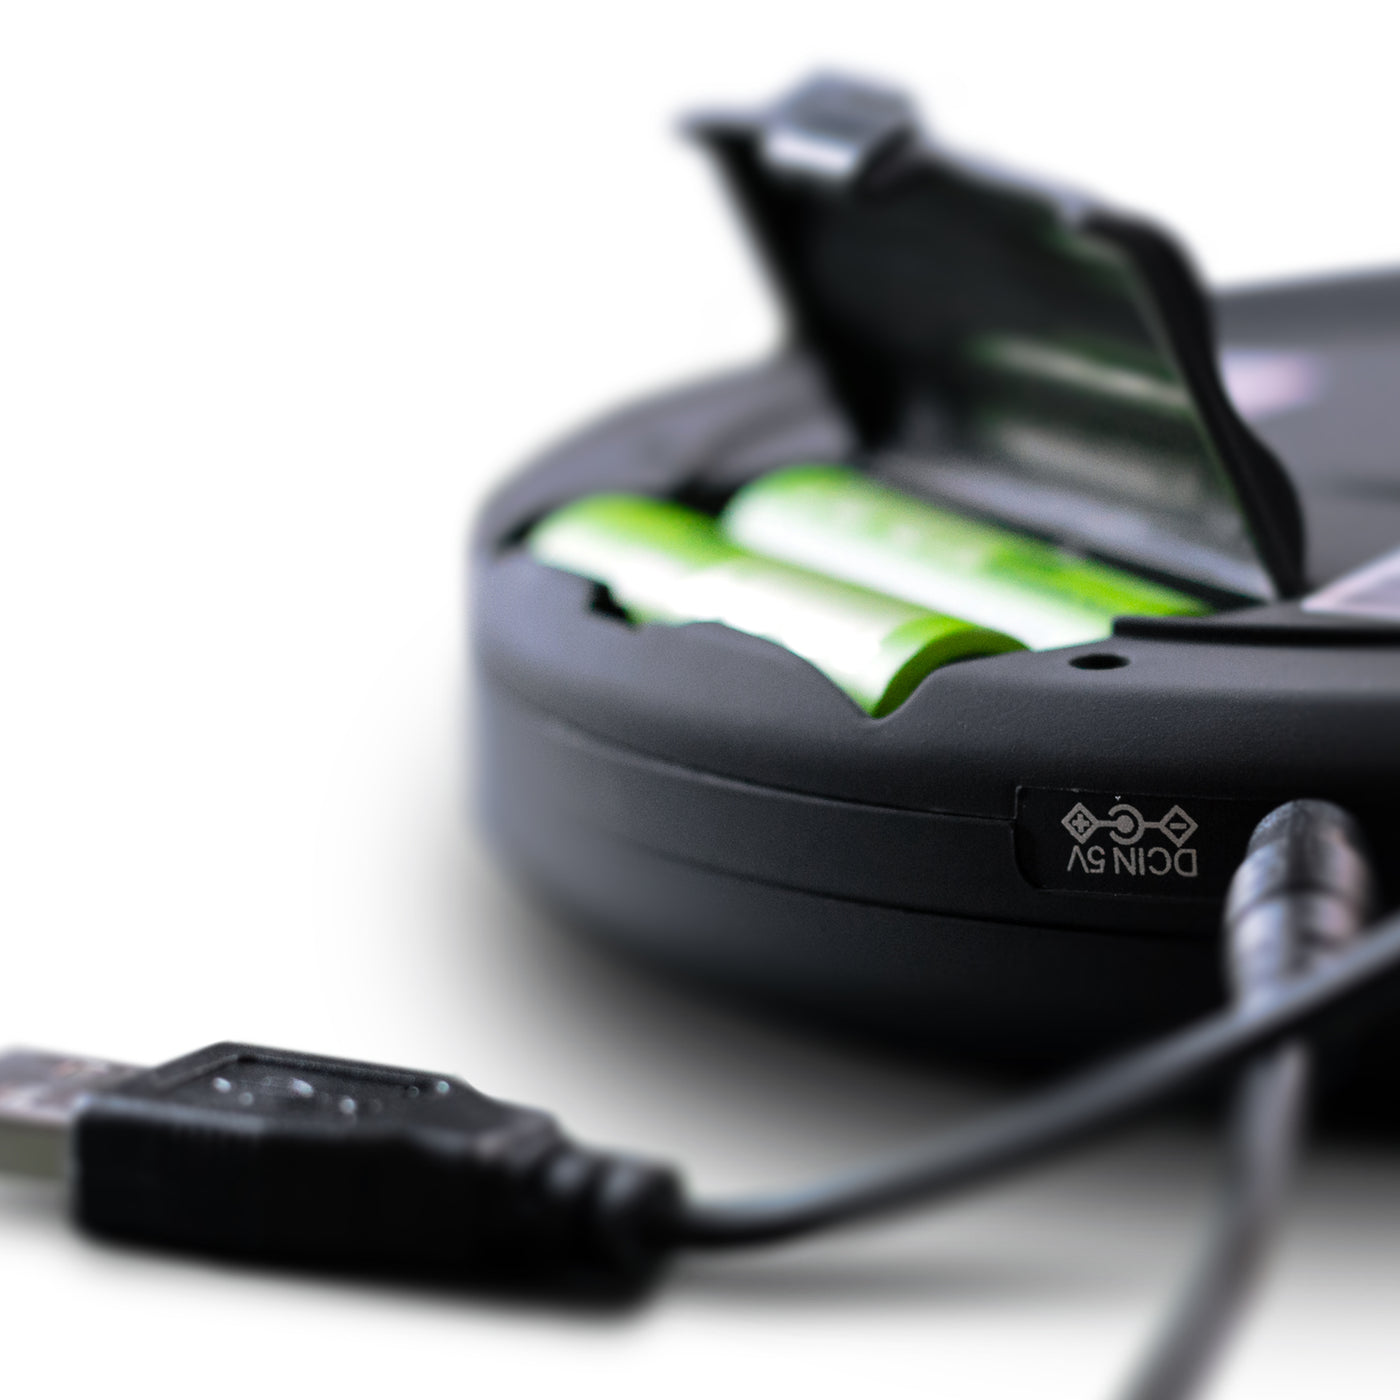 LENCO CD-300BK - Draagbare Bluetooth® CD-MP3 speler met anti-shock - Zwart